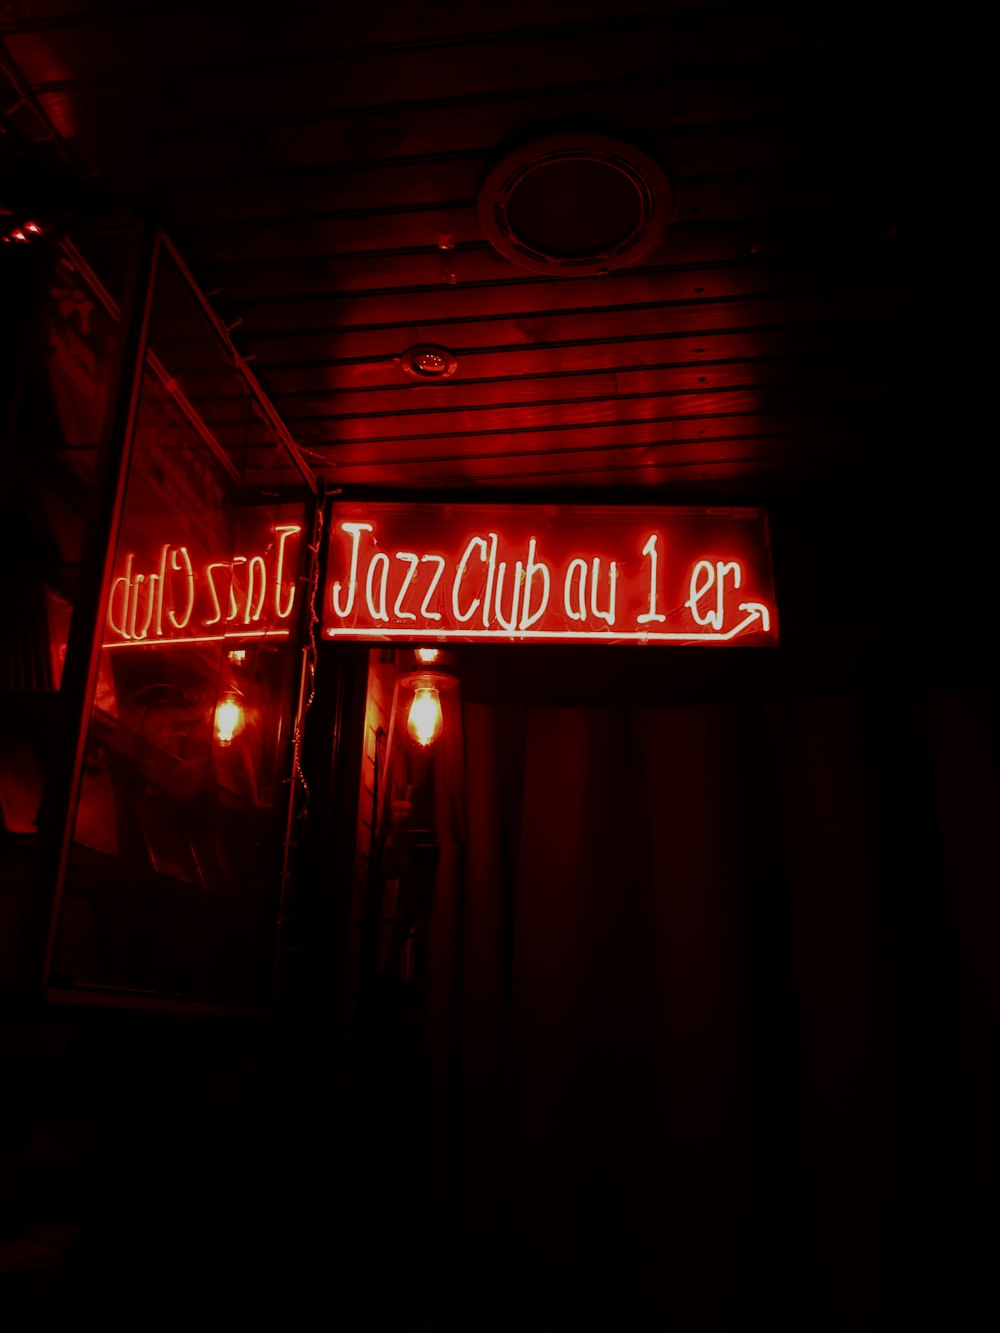 Sinalização neon do Jazz Club ativada